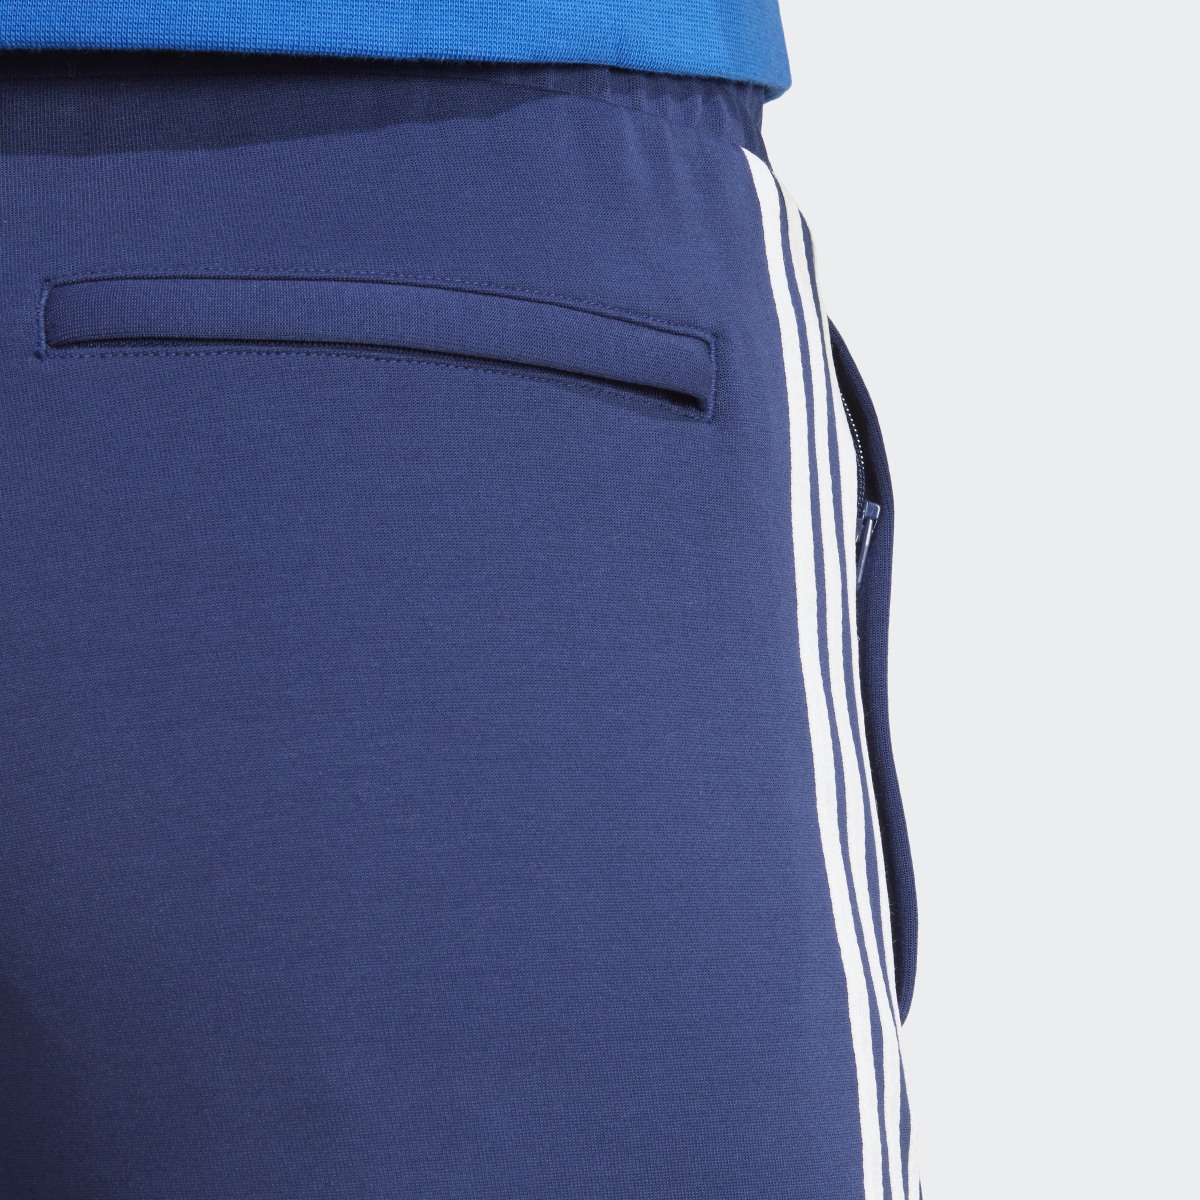 Adidas Italy Sweat Pants. 6